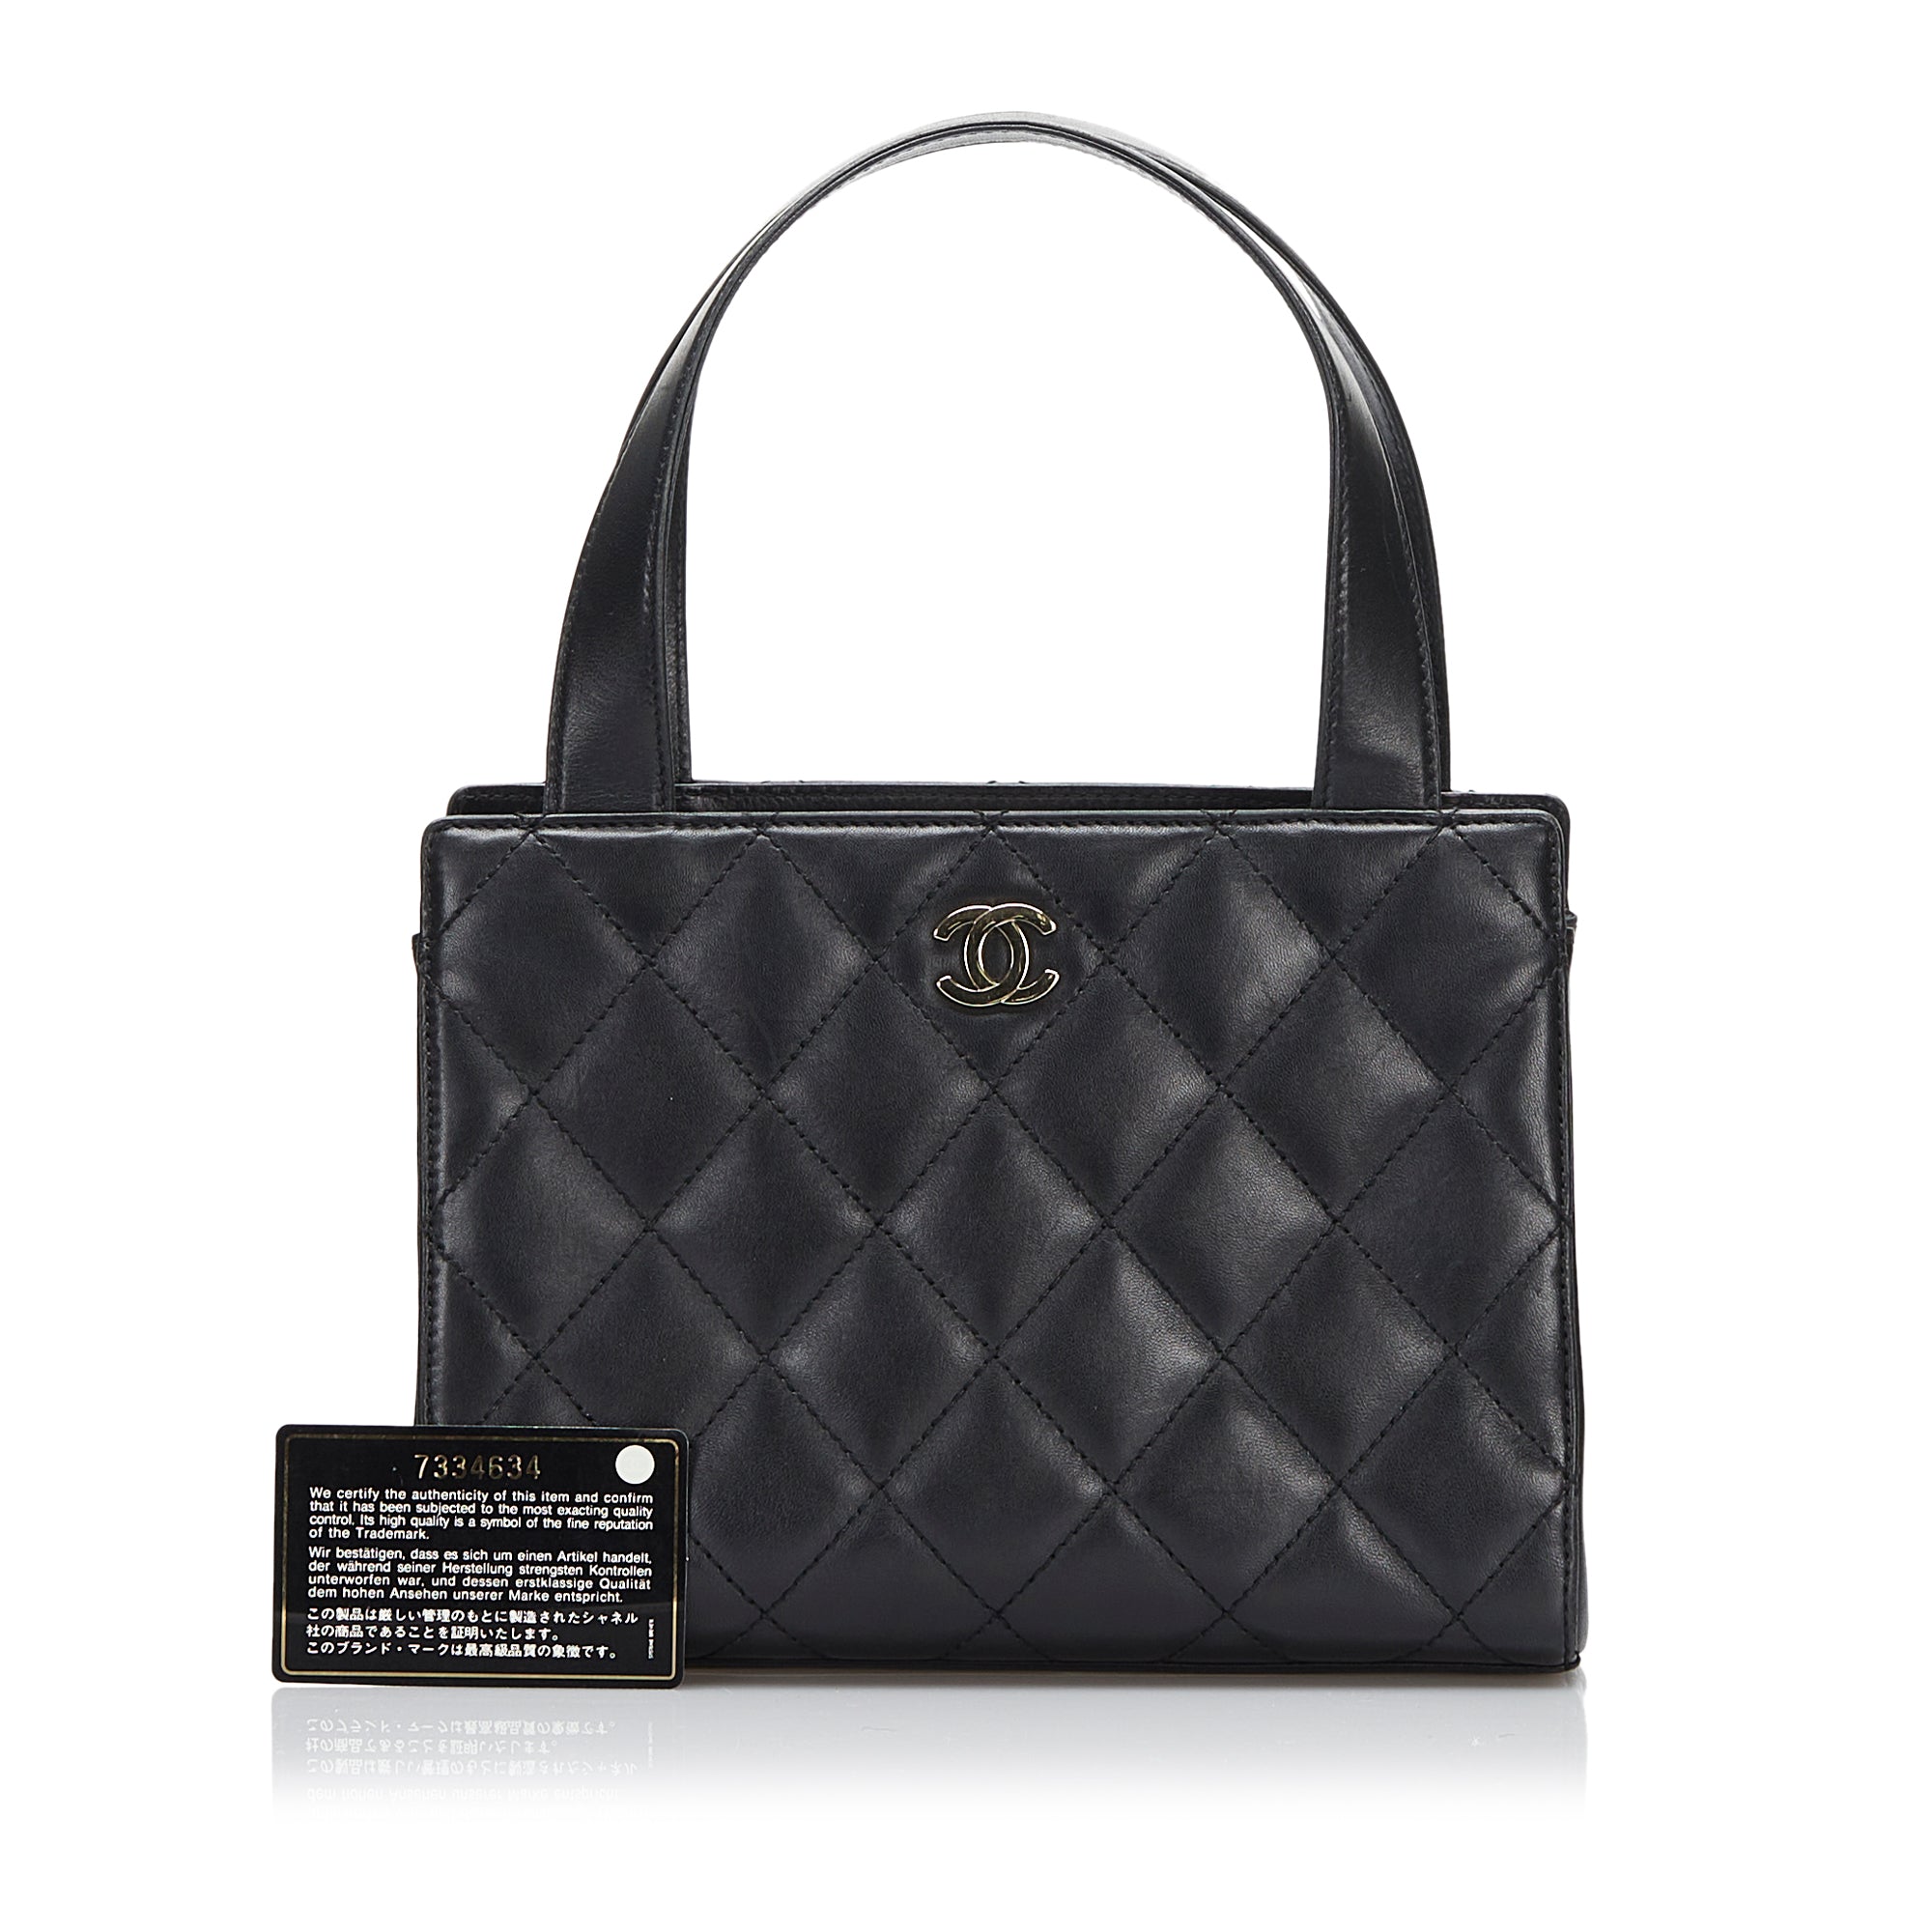 Black Chanel Lambskin Leather Handbag